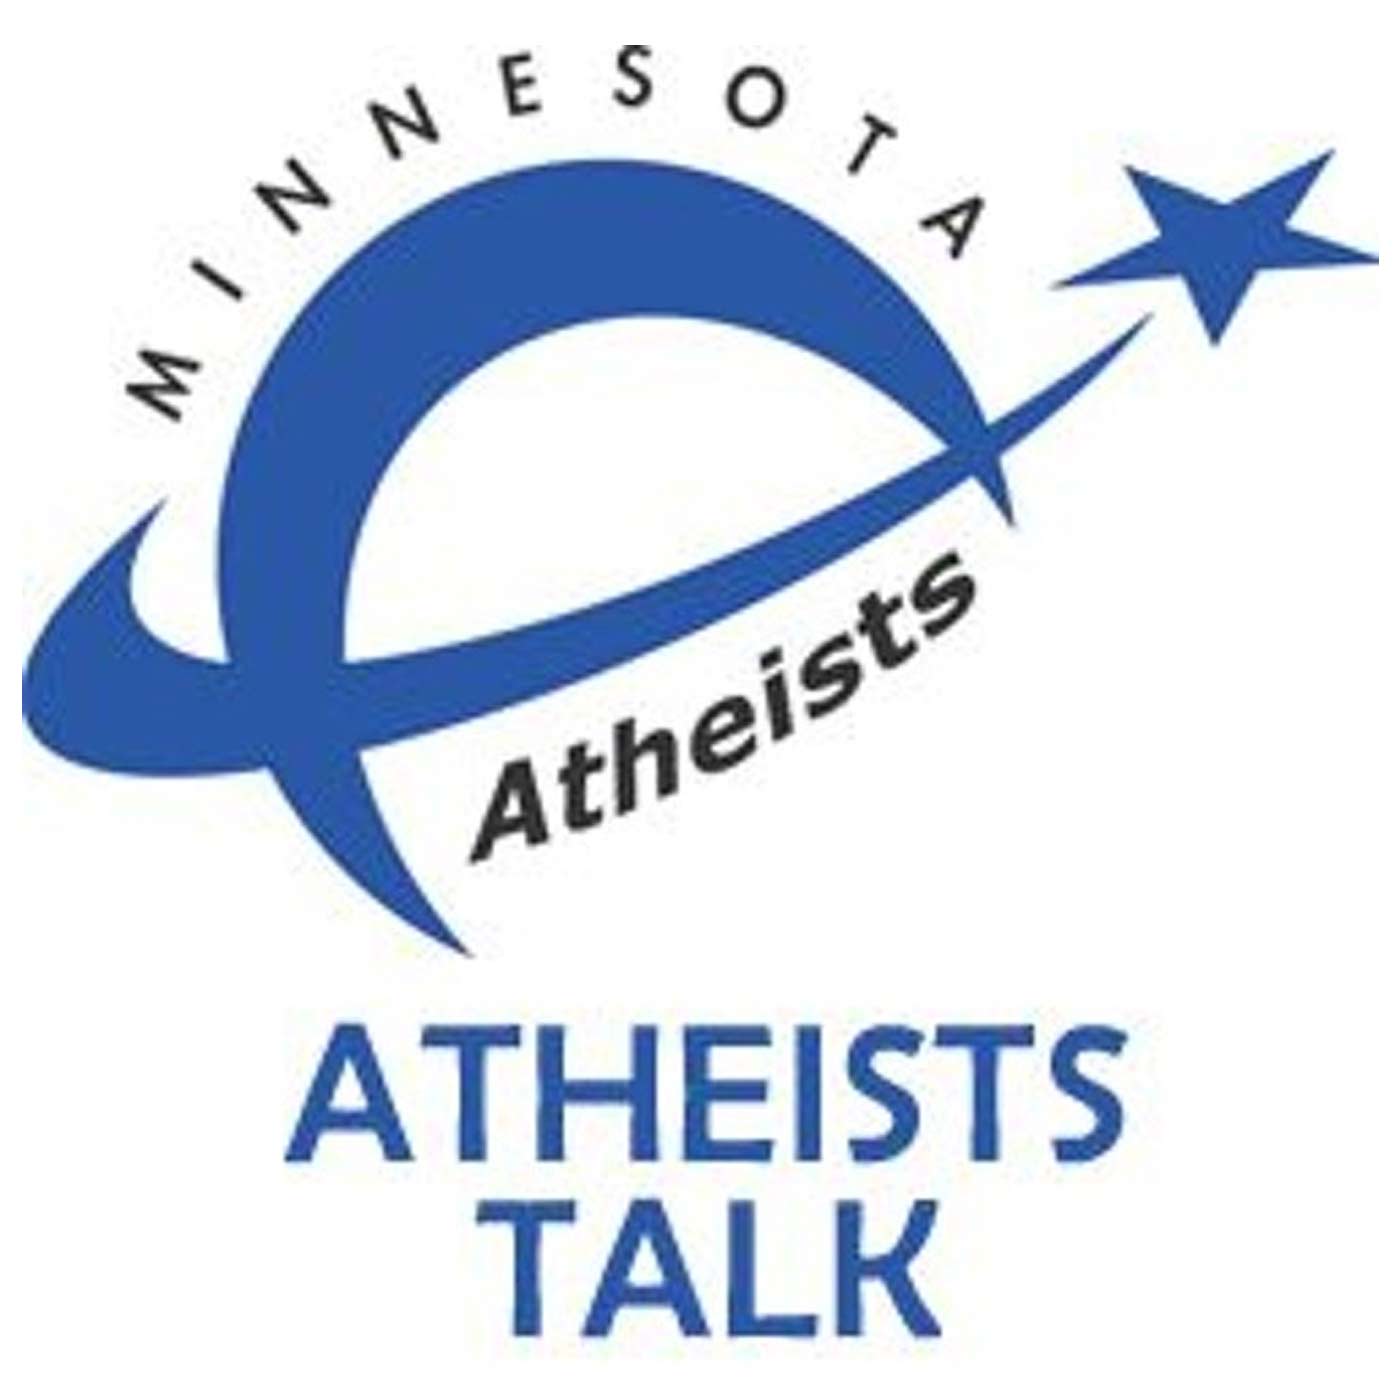 Atheists Talk - AM950 The Progressive Voice of Minnesota